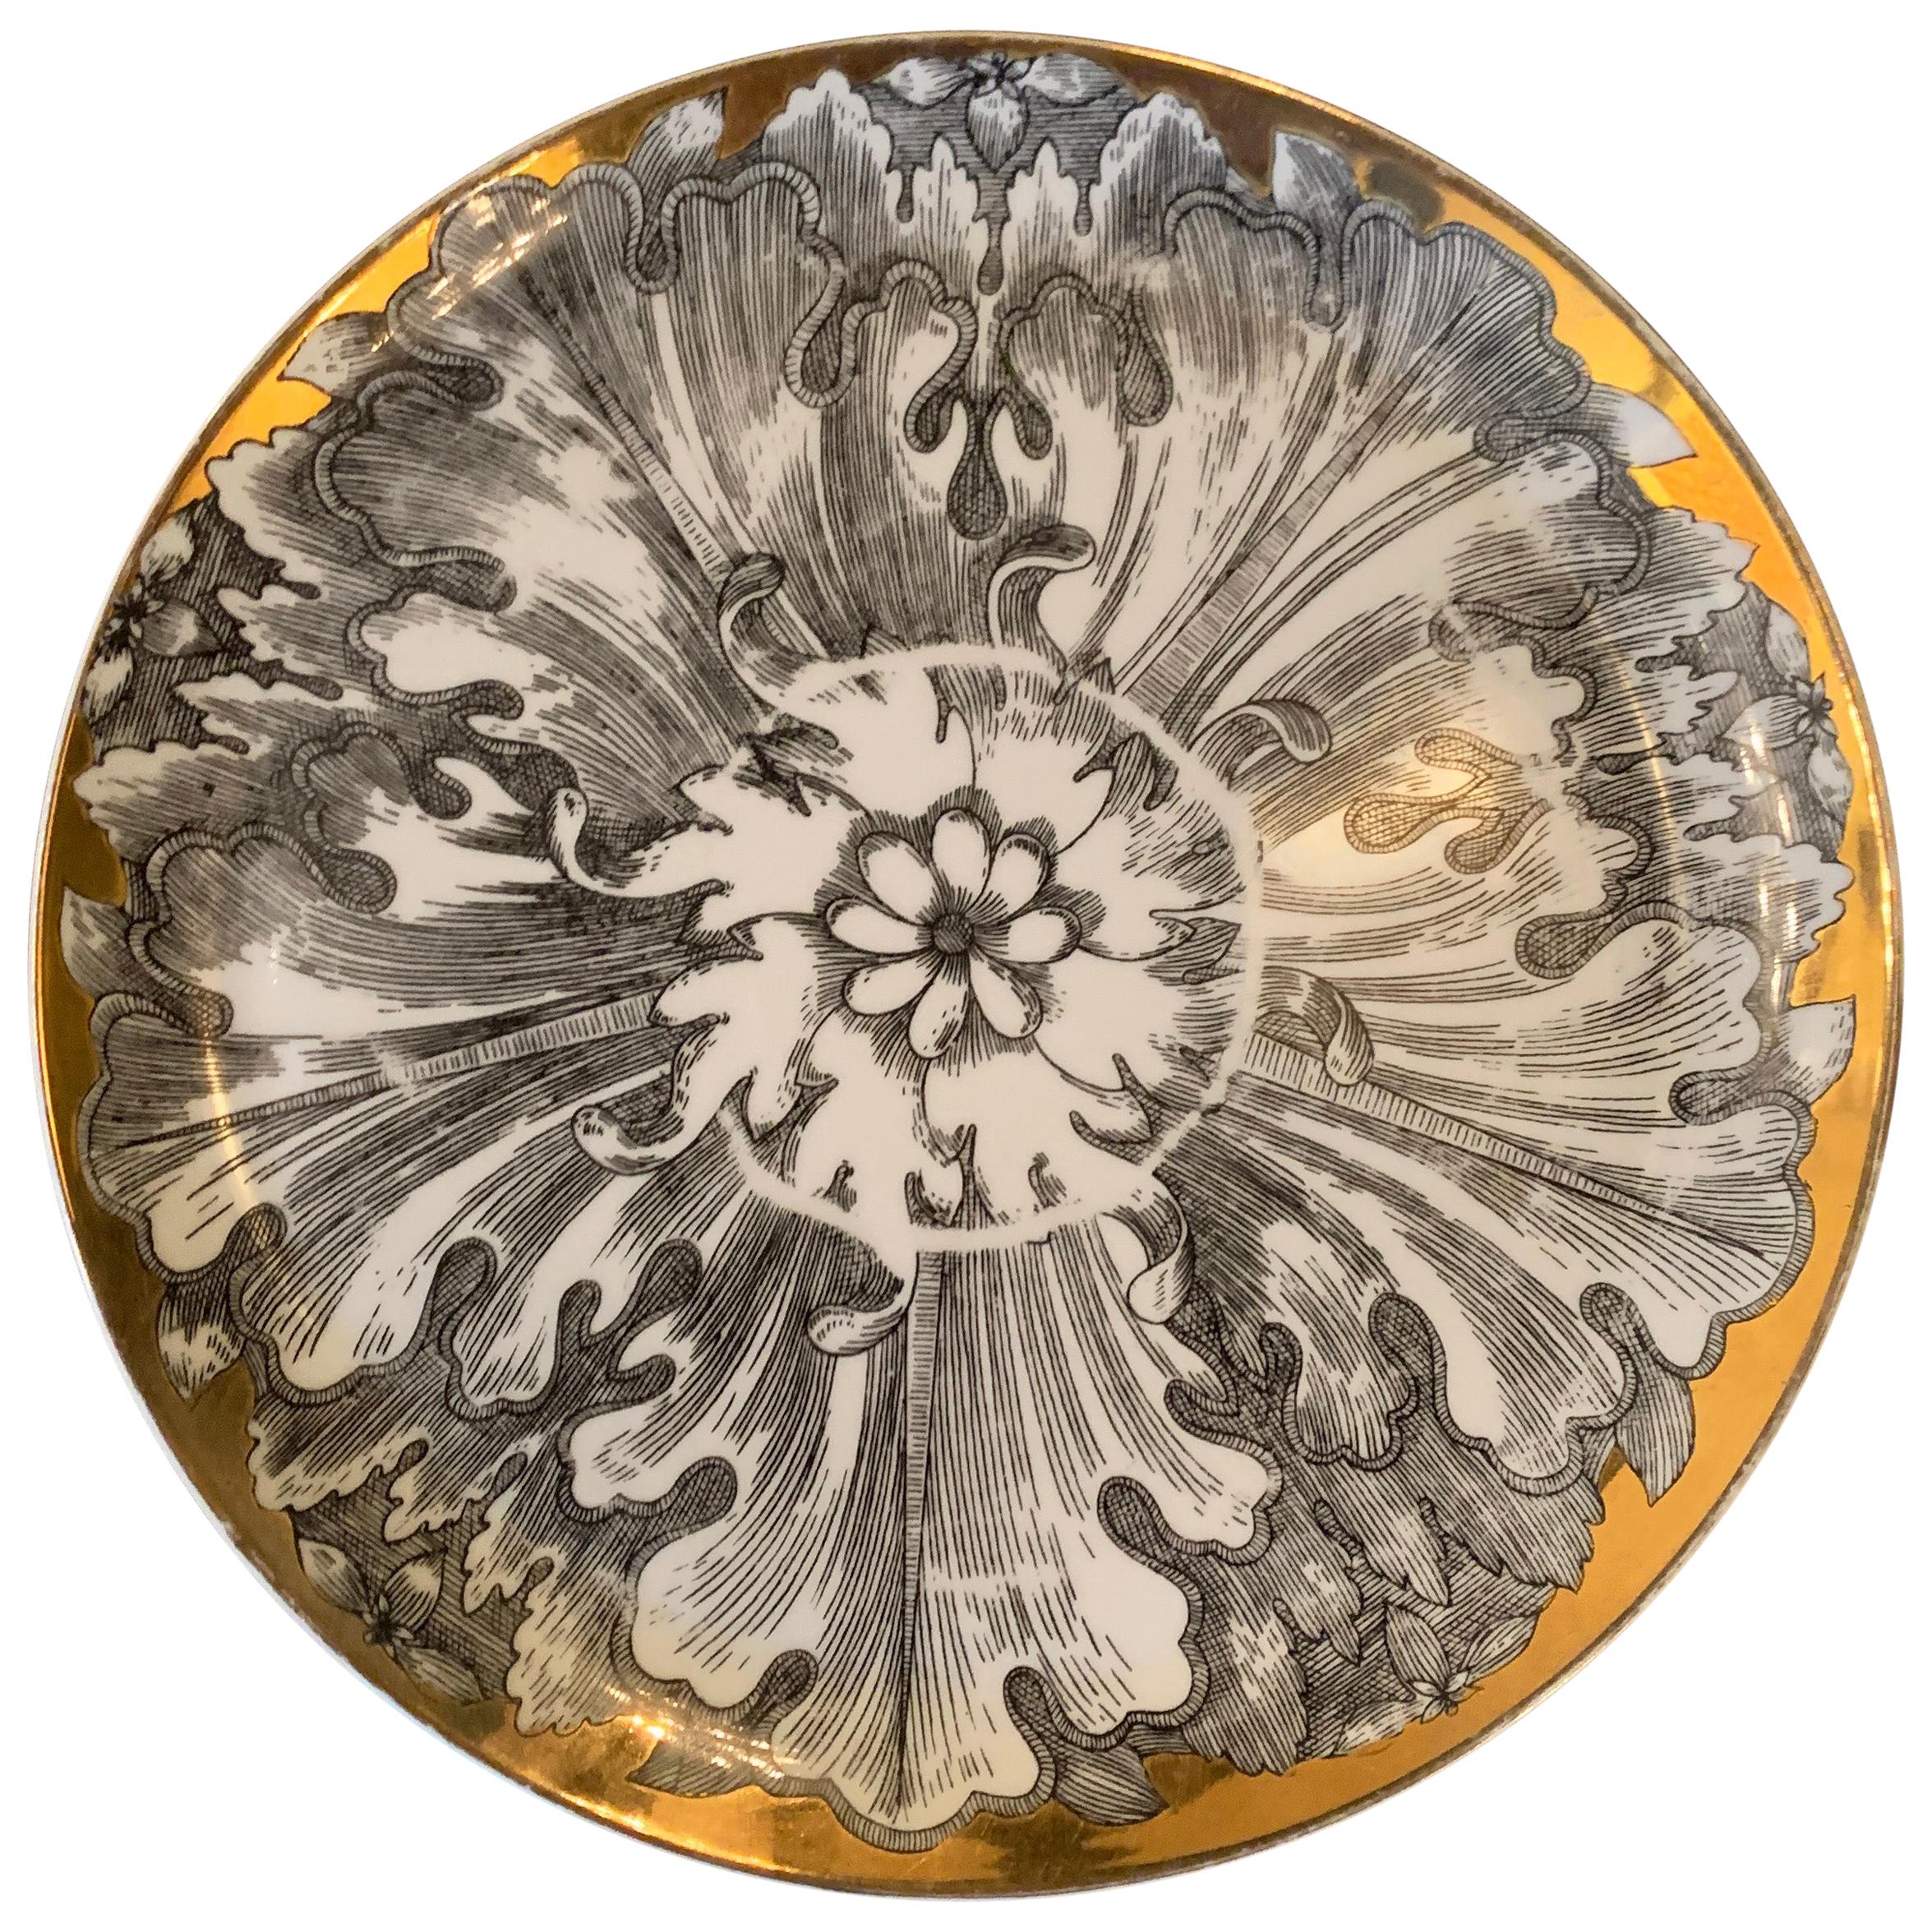 Decorative Italian Gilt Plate by Bucciarelli